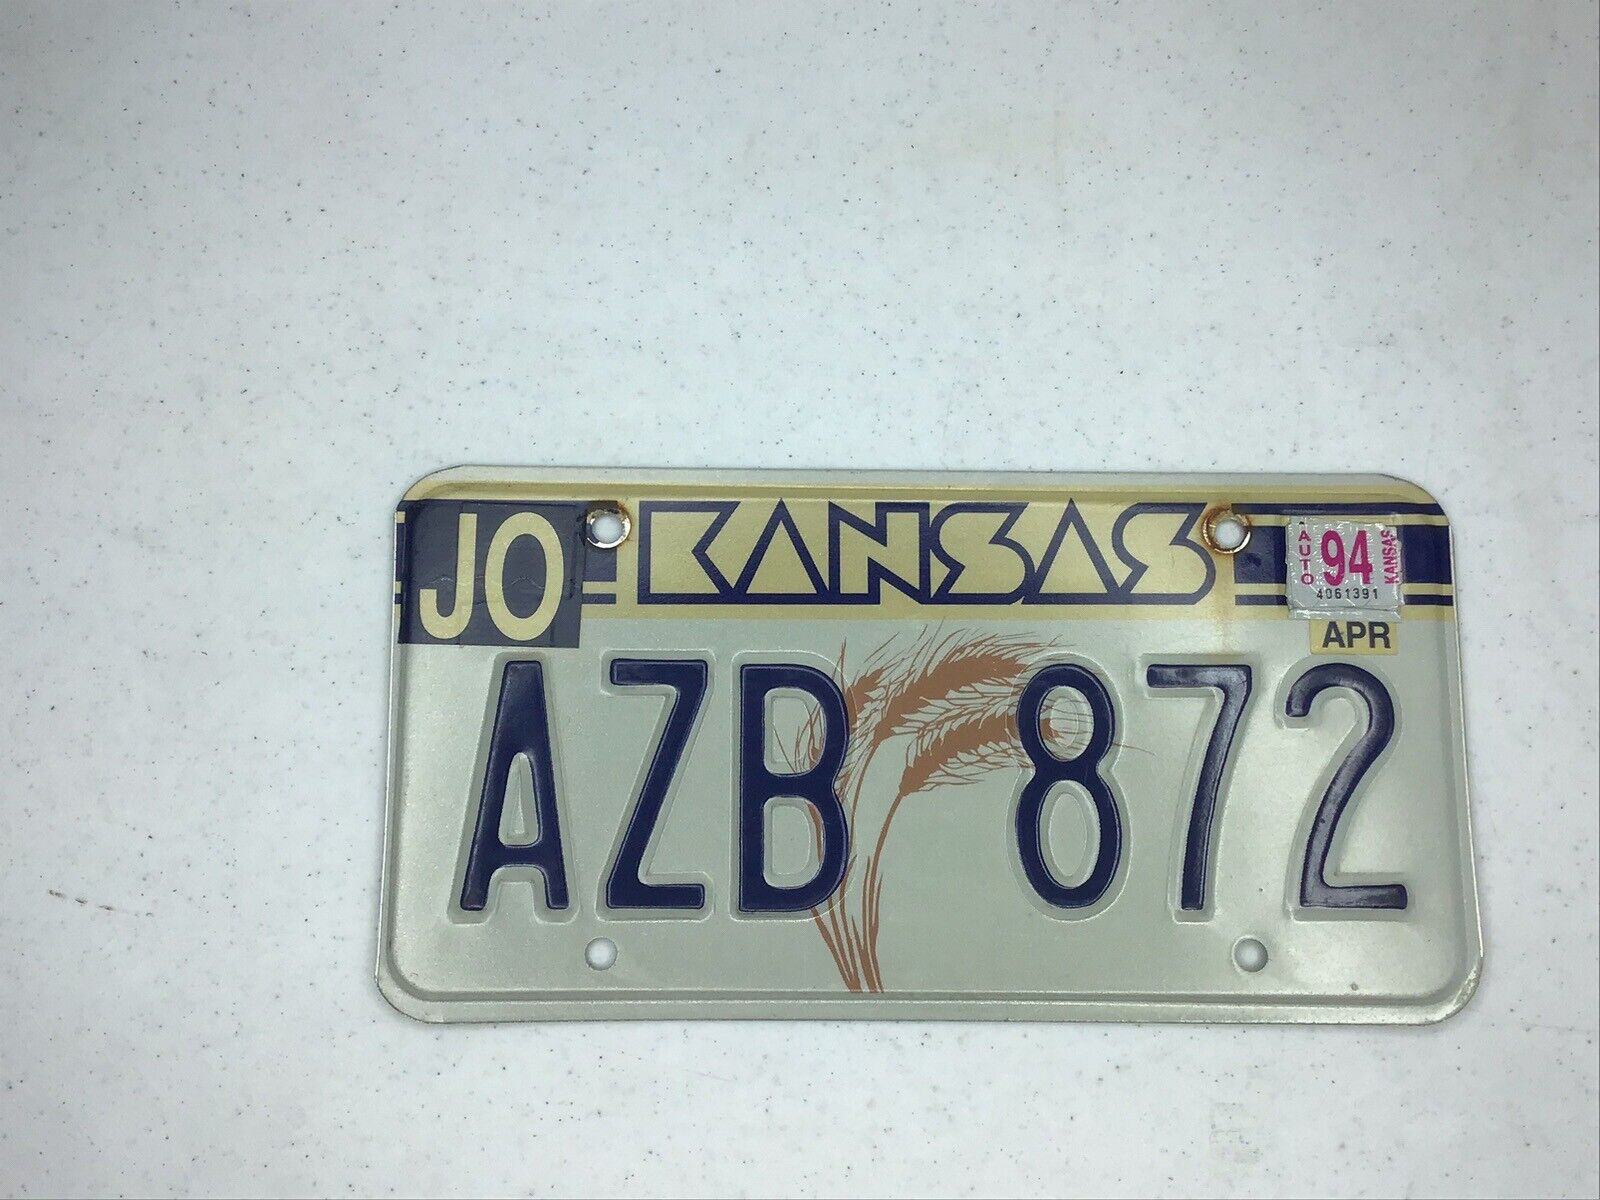 1994 Kansas Wheat License Plate AZB872 Johnson County April